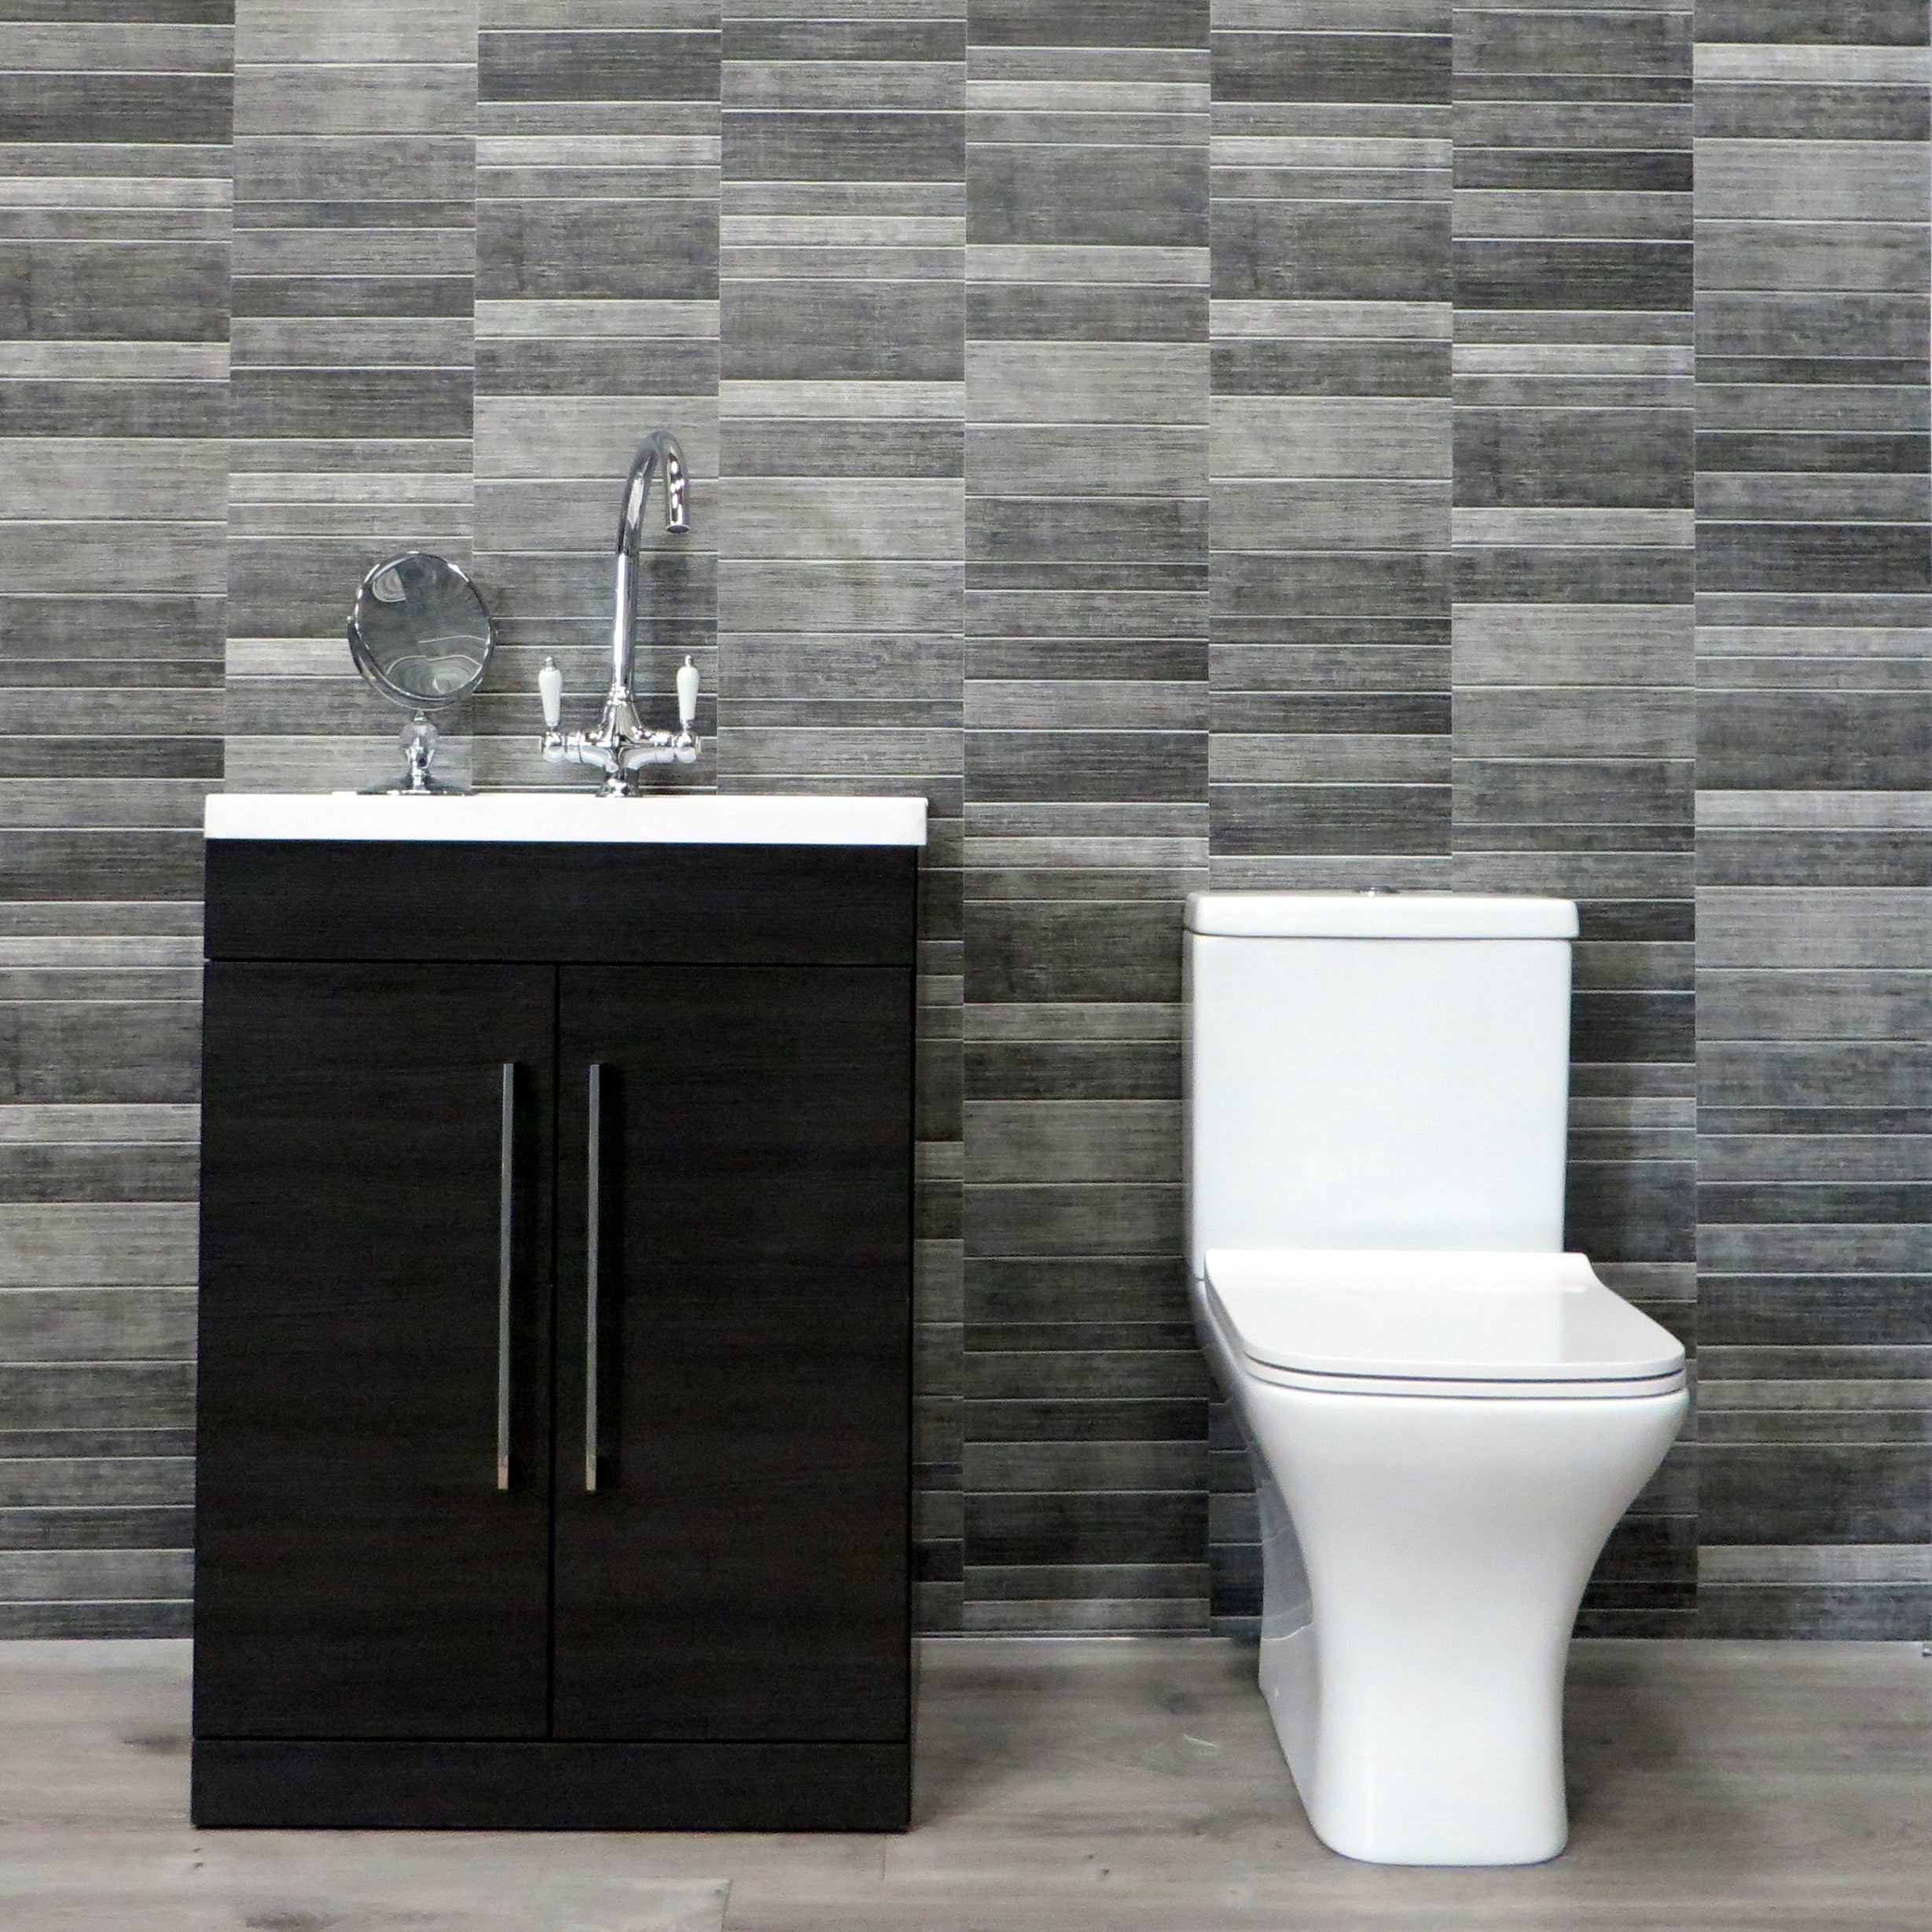 Sample of Dark Grey Small Tile 5mm Bathroom Cladding Wet Wall Panels